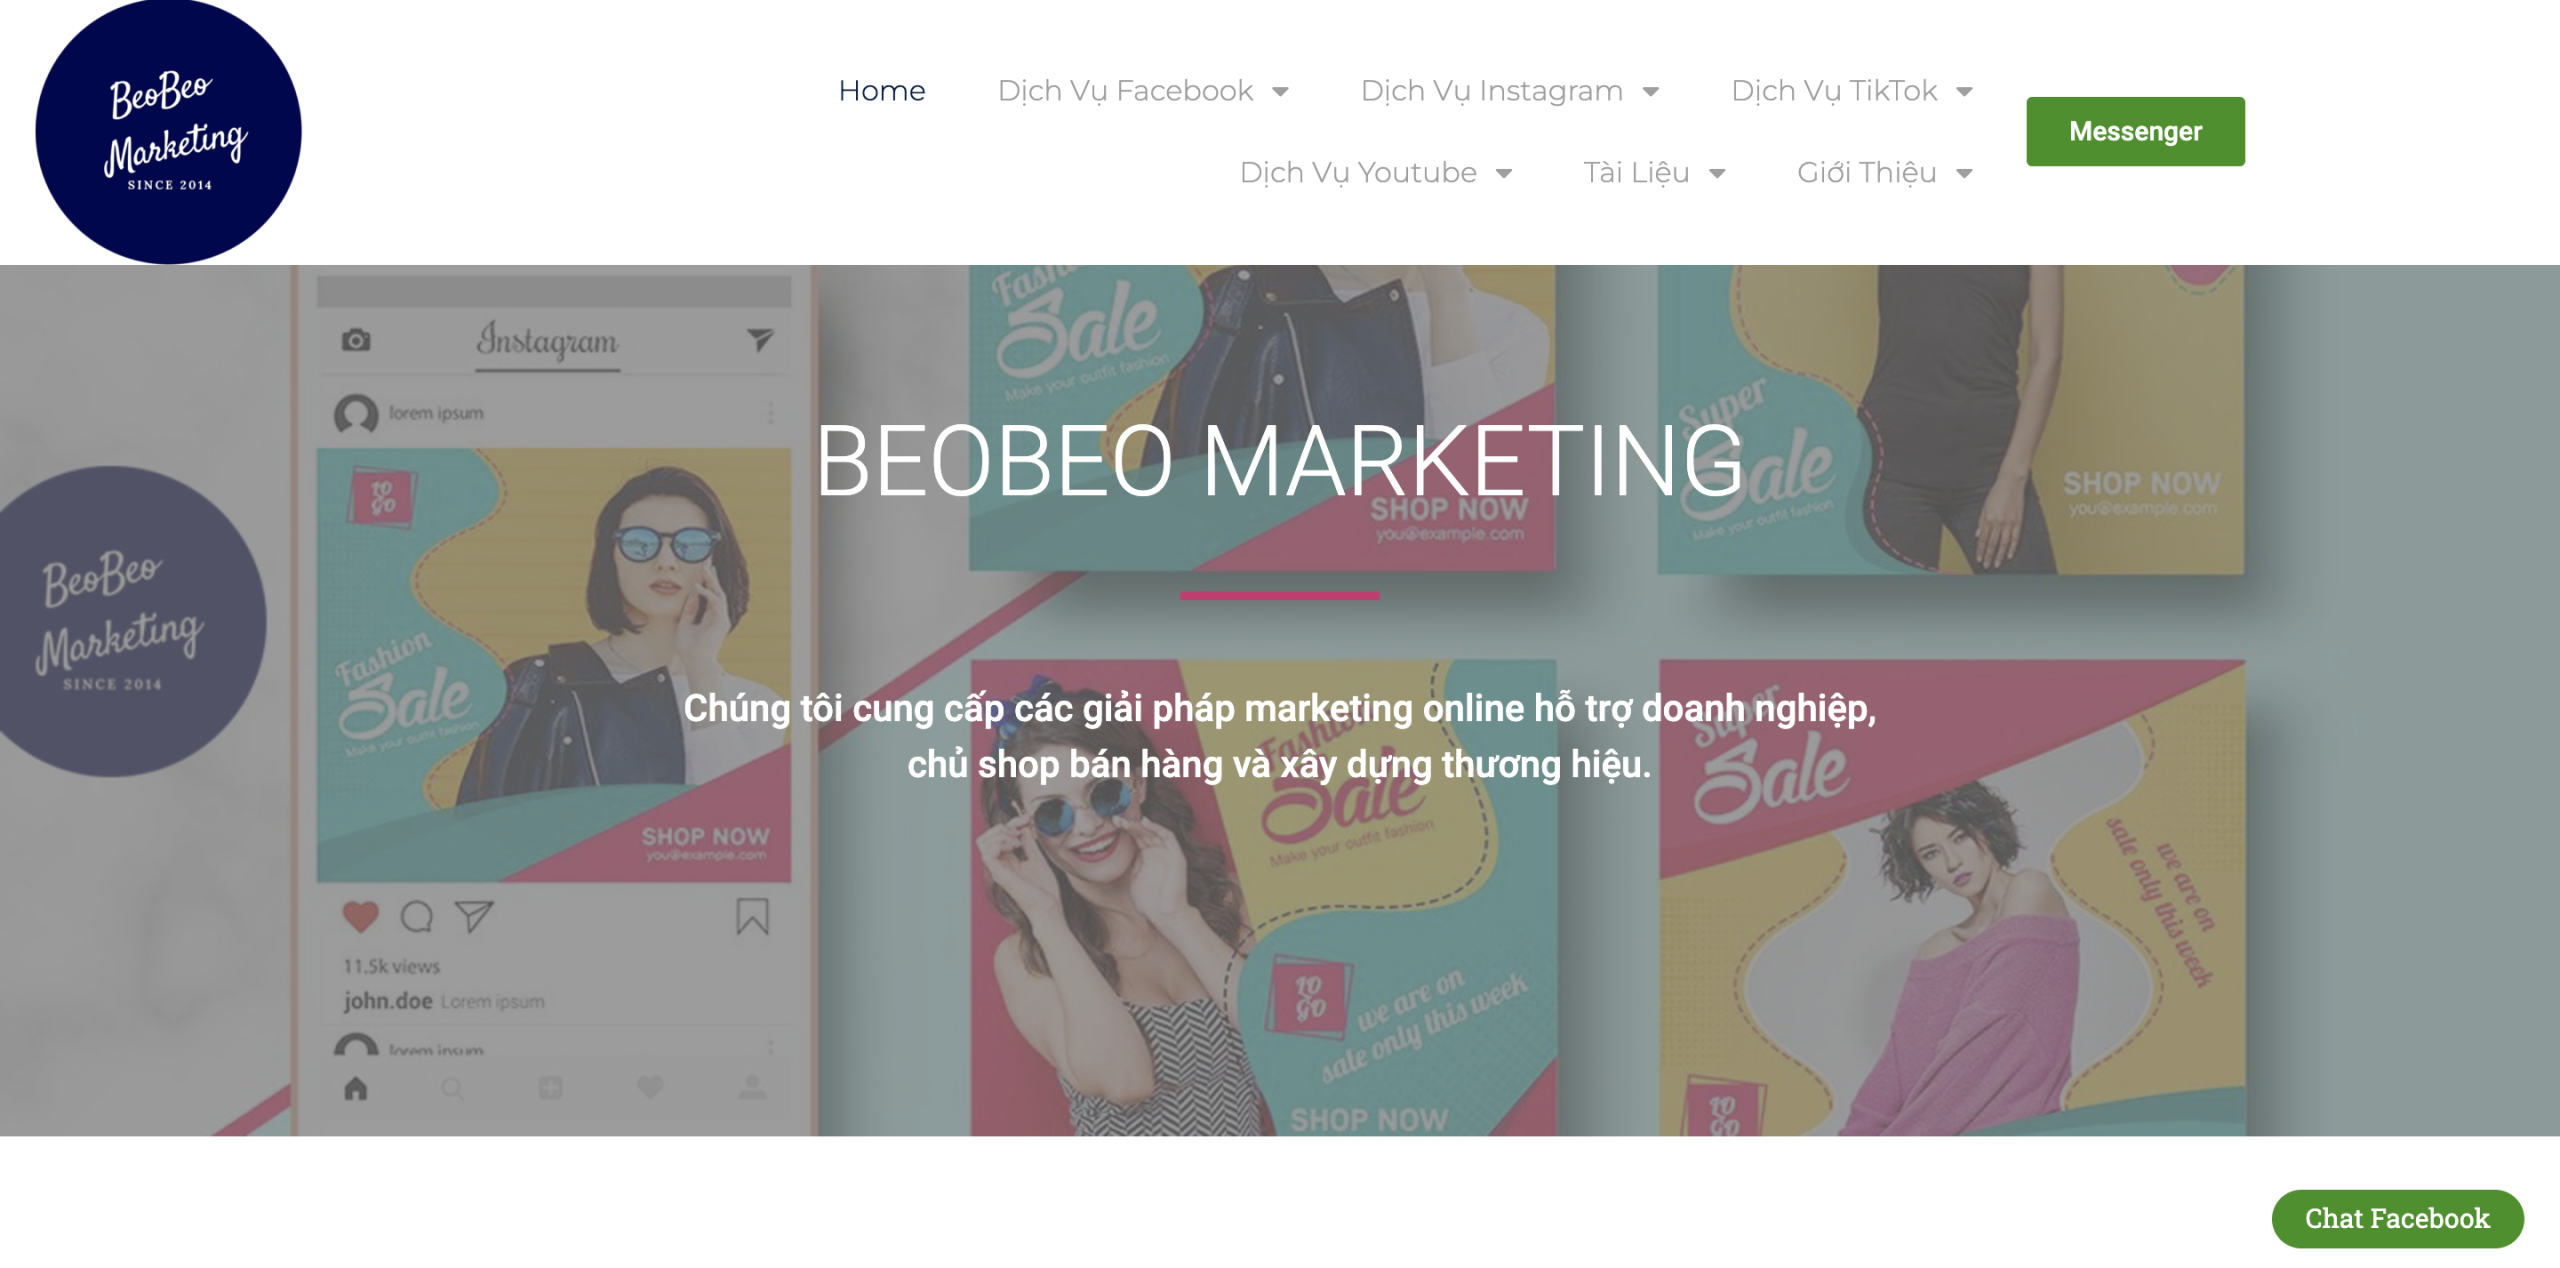 Beobeo marketing